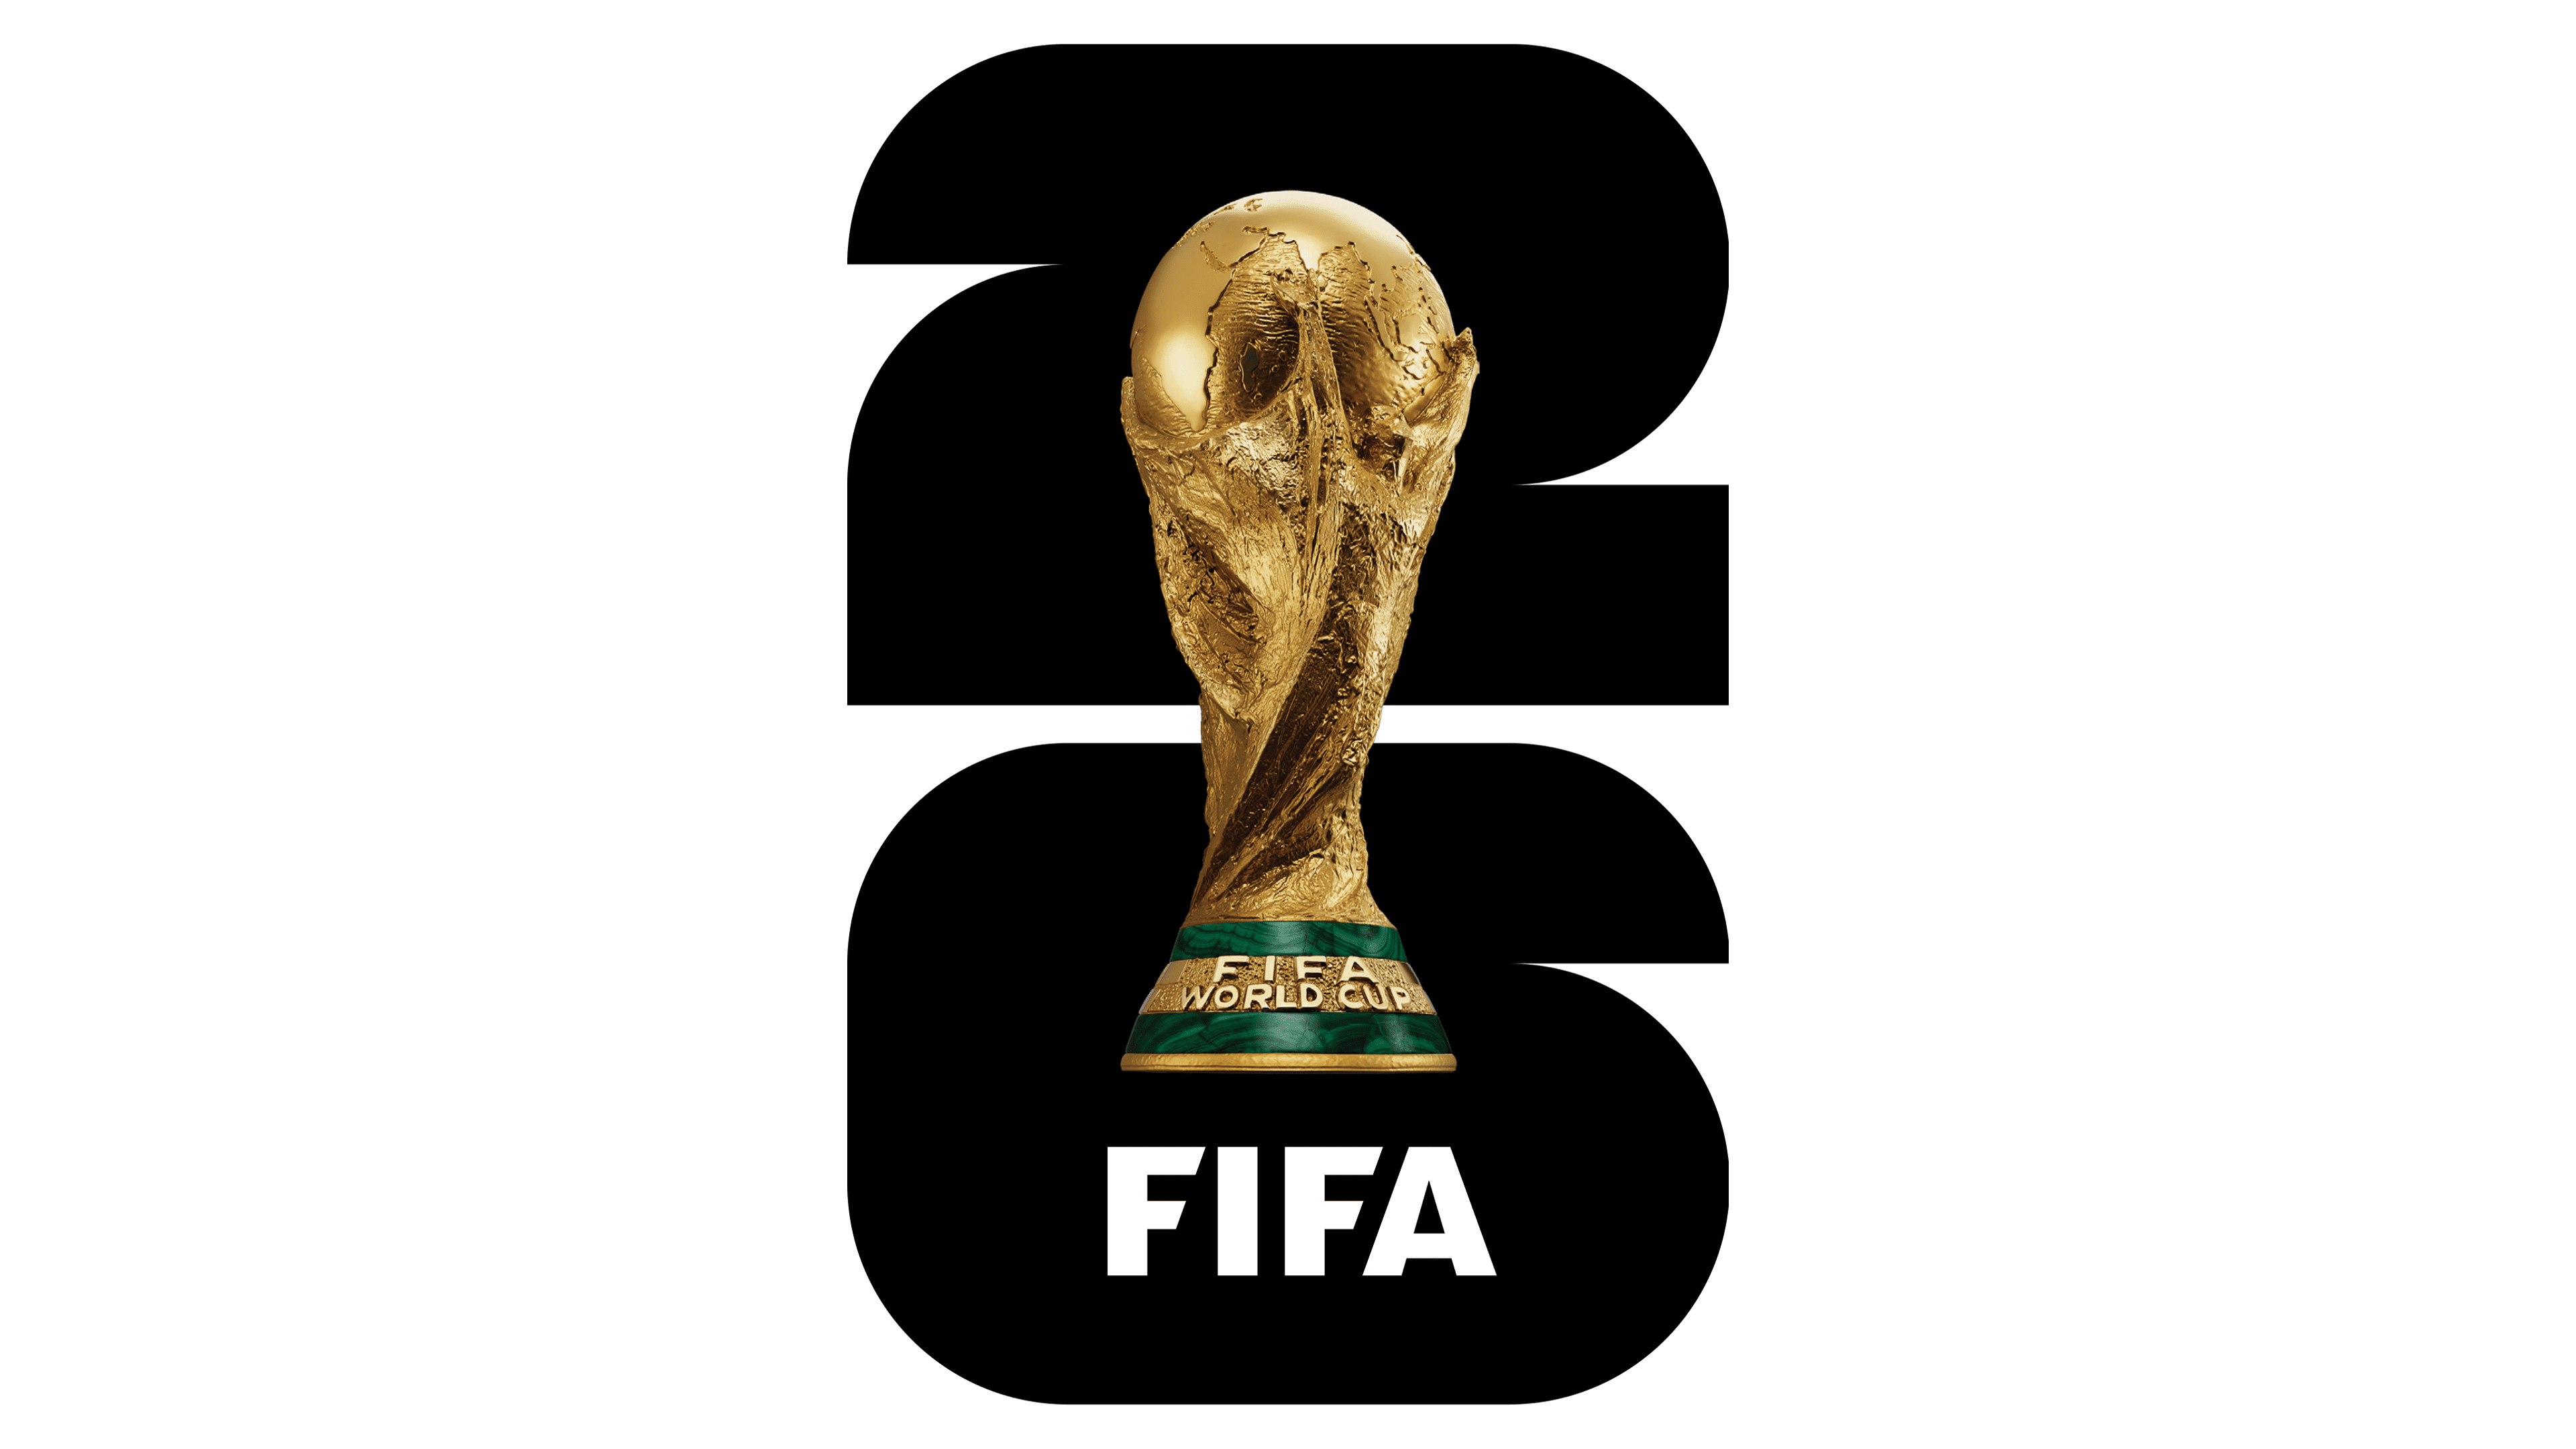 FIFA World Cup logos